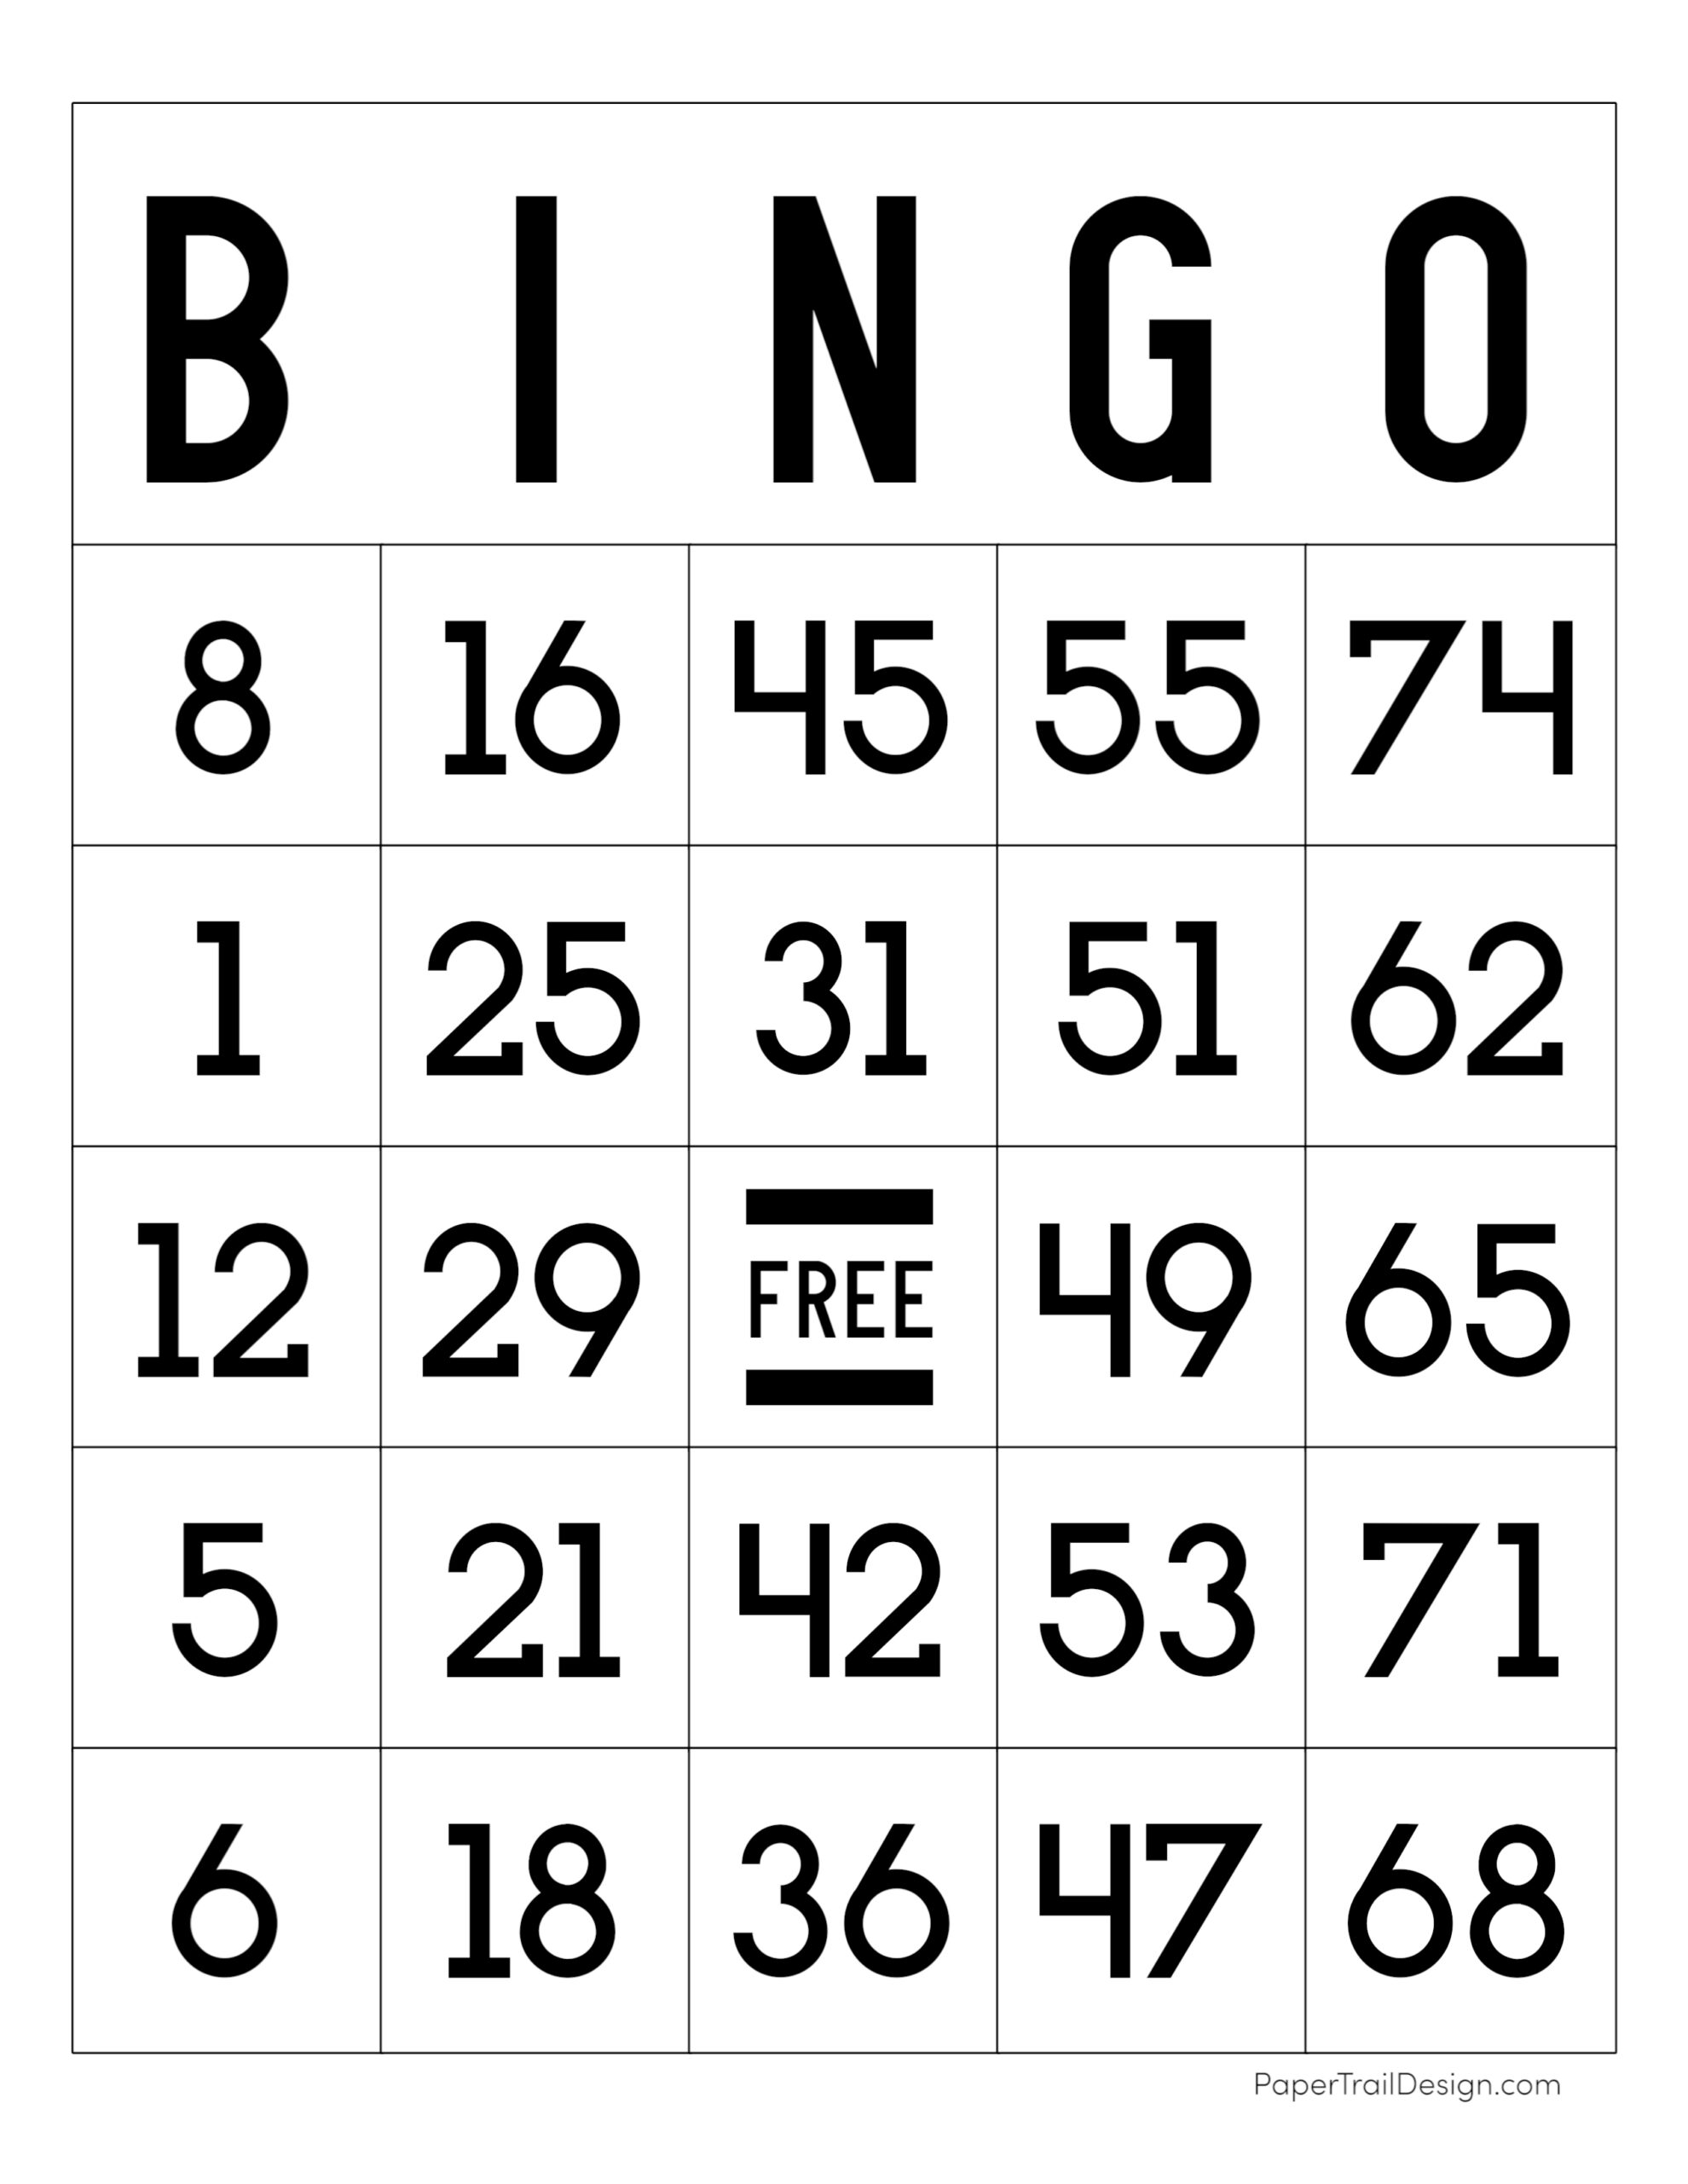 free-printable-bingo-cards-activity-connection-com-activity-director